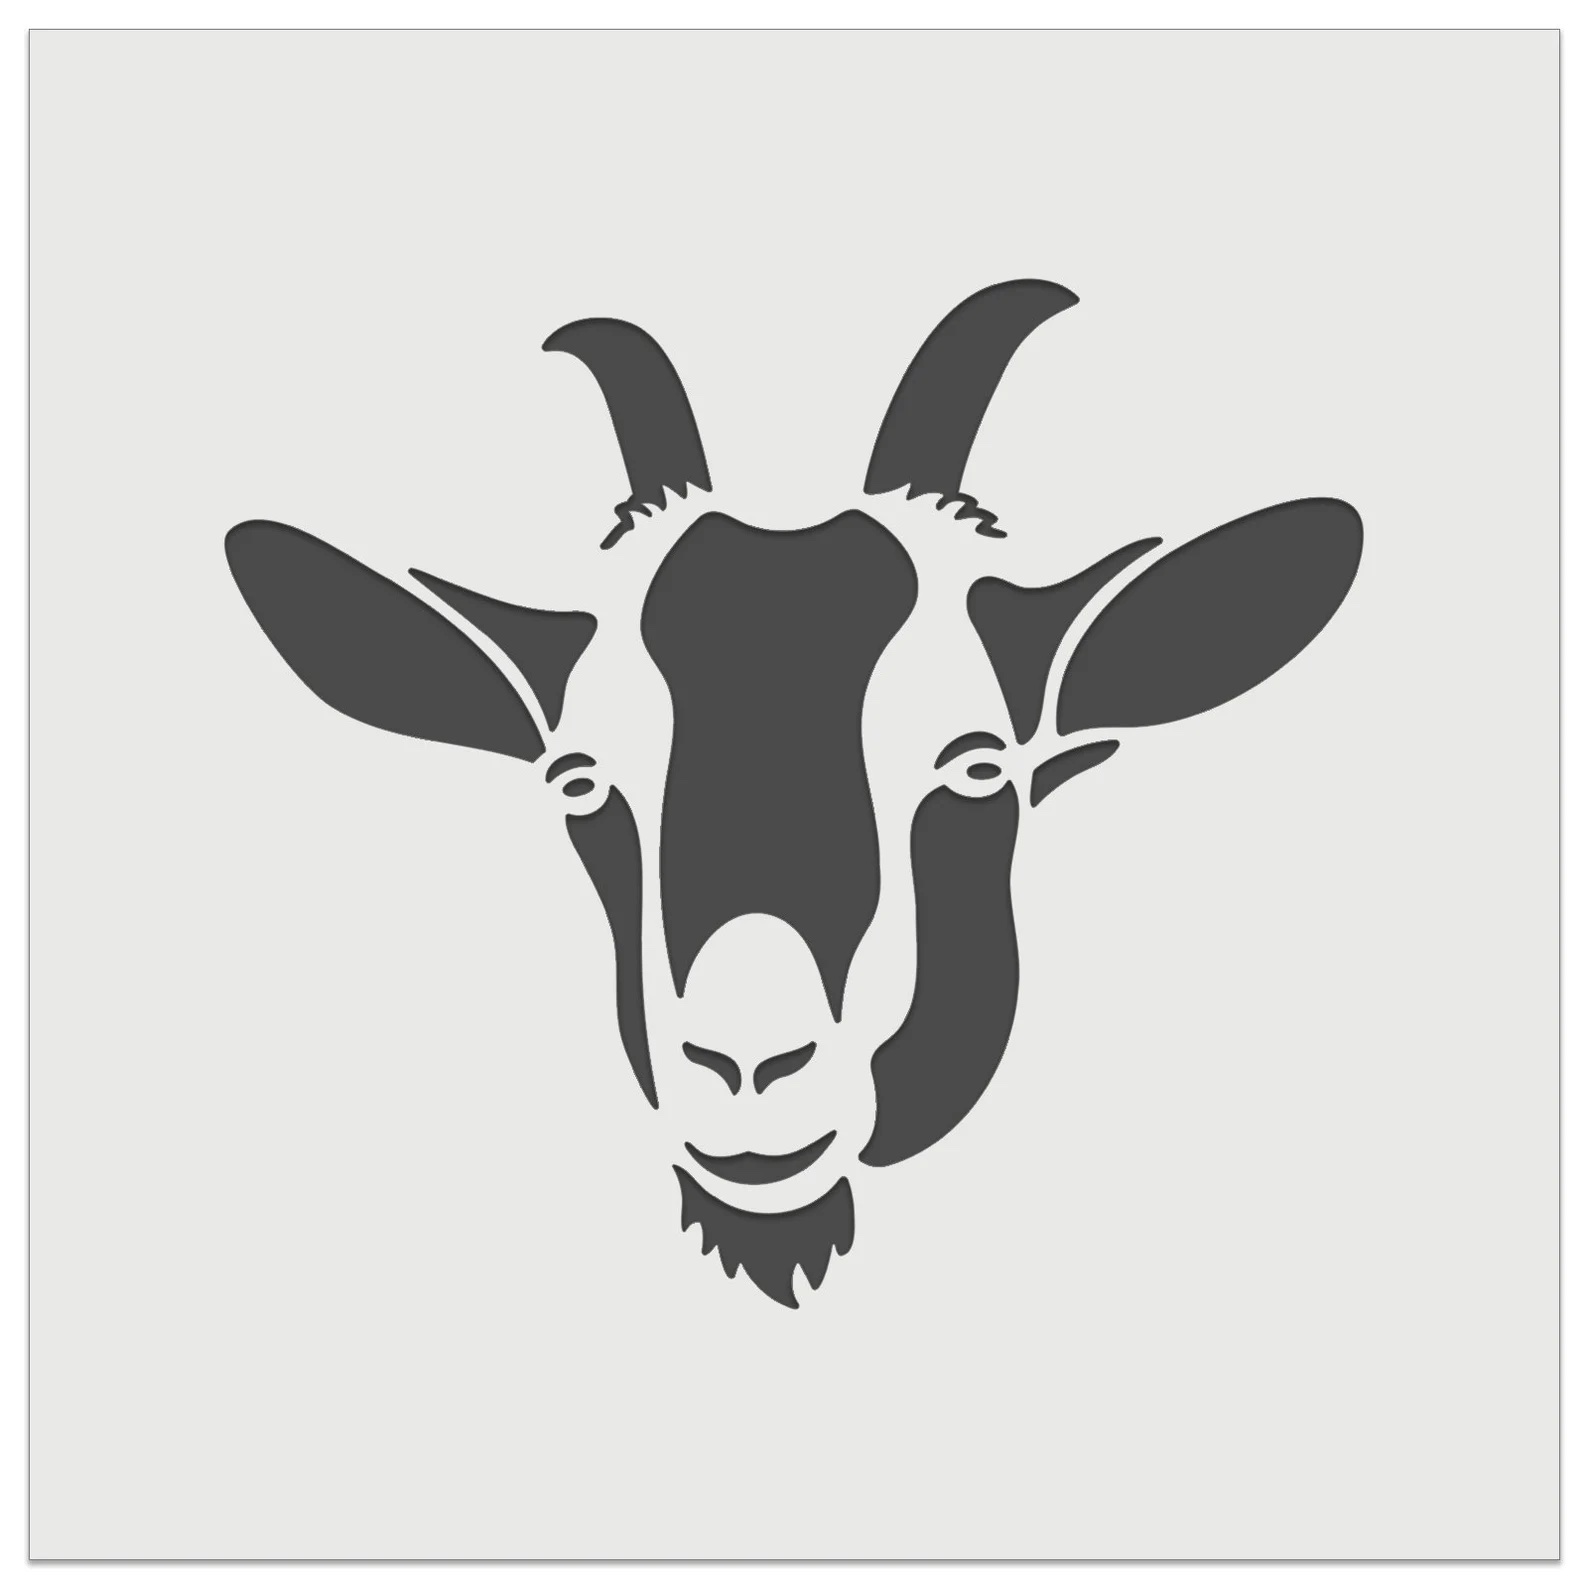 Goat Emblem.jpg